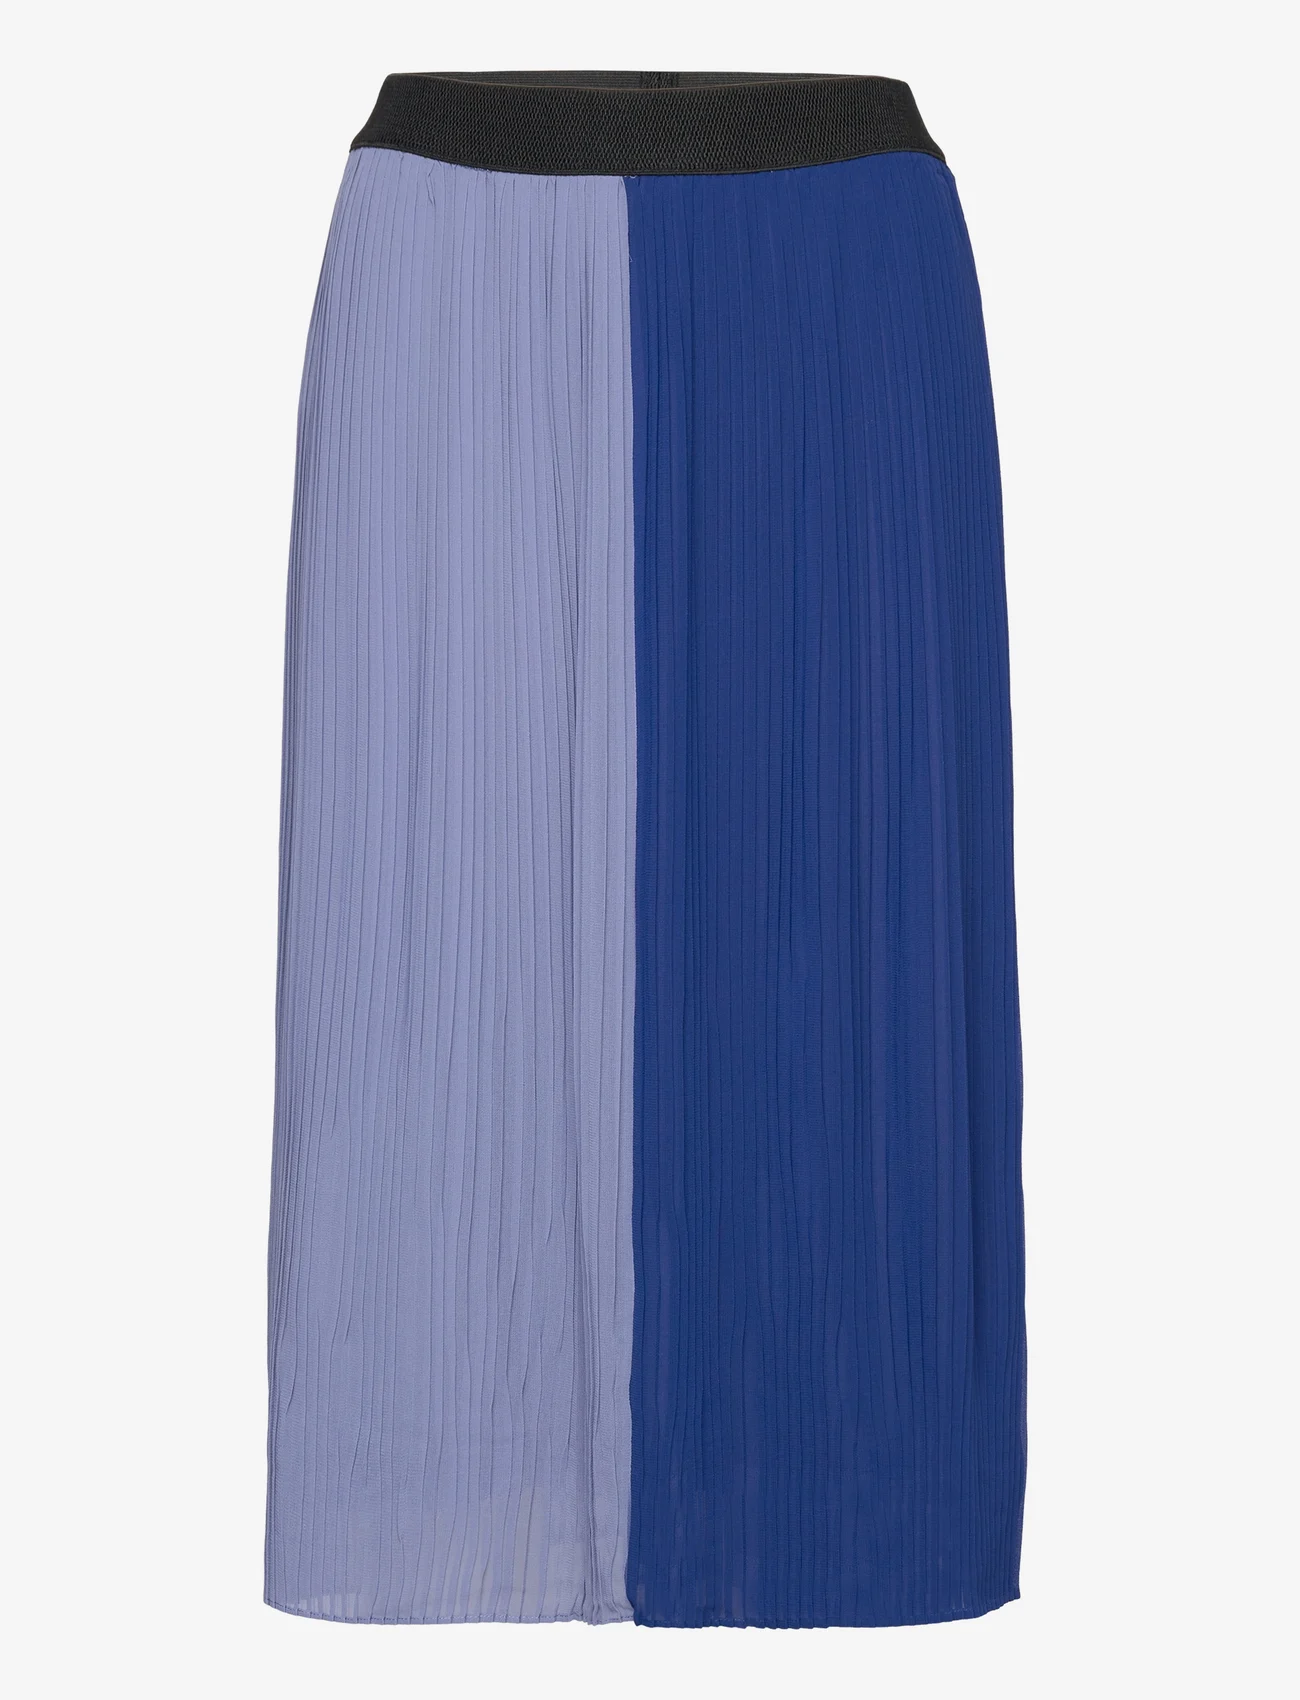 Saint Tropez - AyaSZ Skirt - plisserede nederdele - colony blue - 0